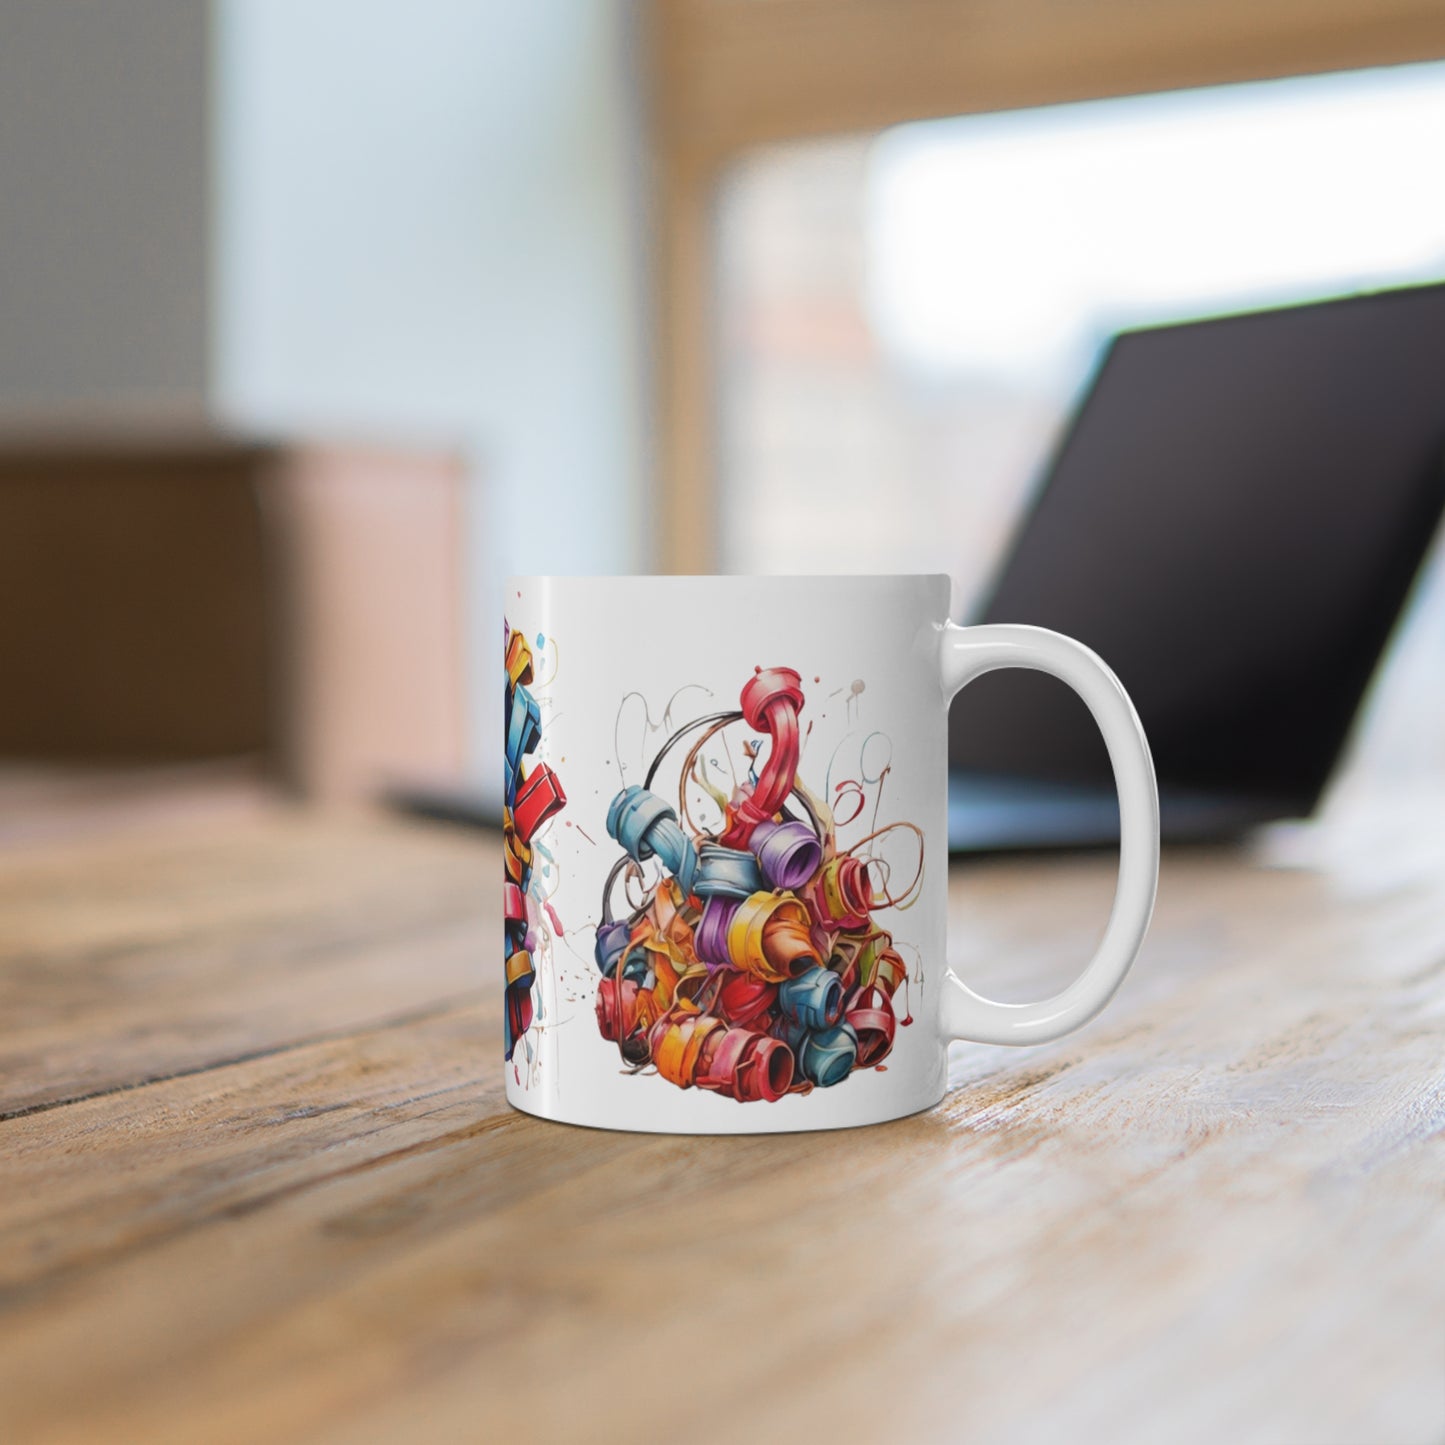 Colourful Messy Artwork Mug - Ceramic Coffee Mug 11oz